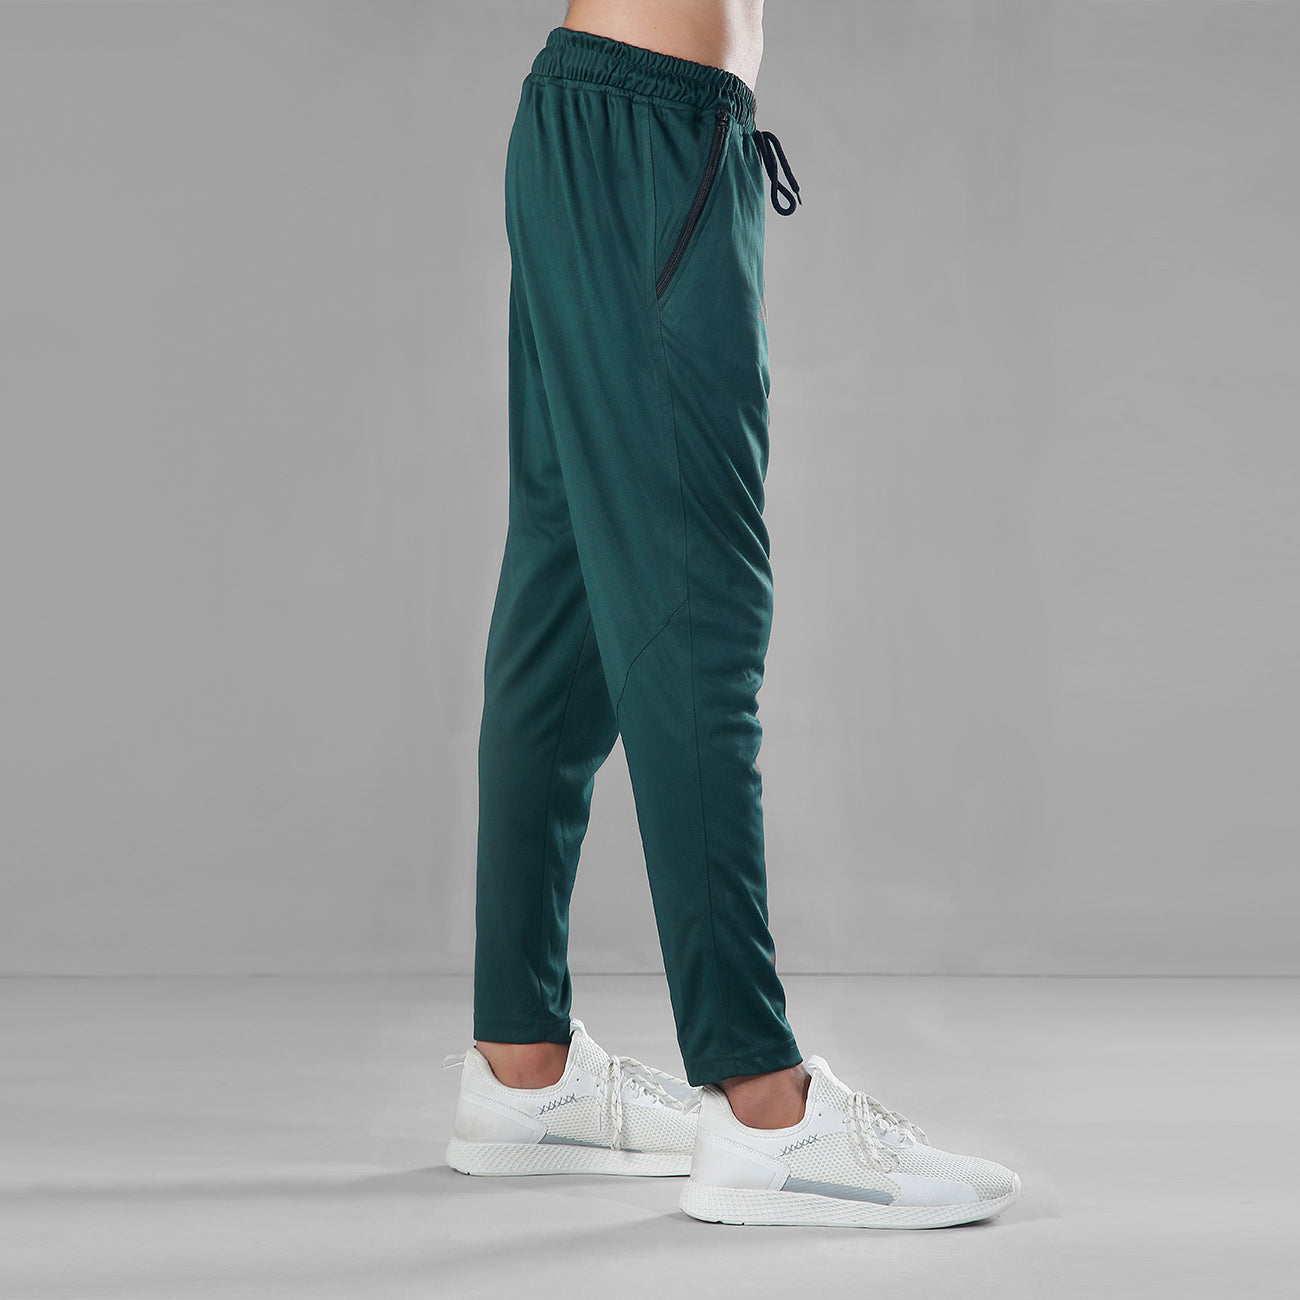 FIREOX Activewear Trouser Green , 2022